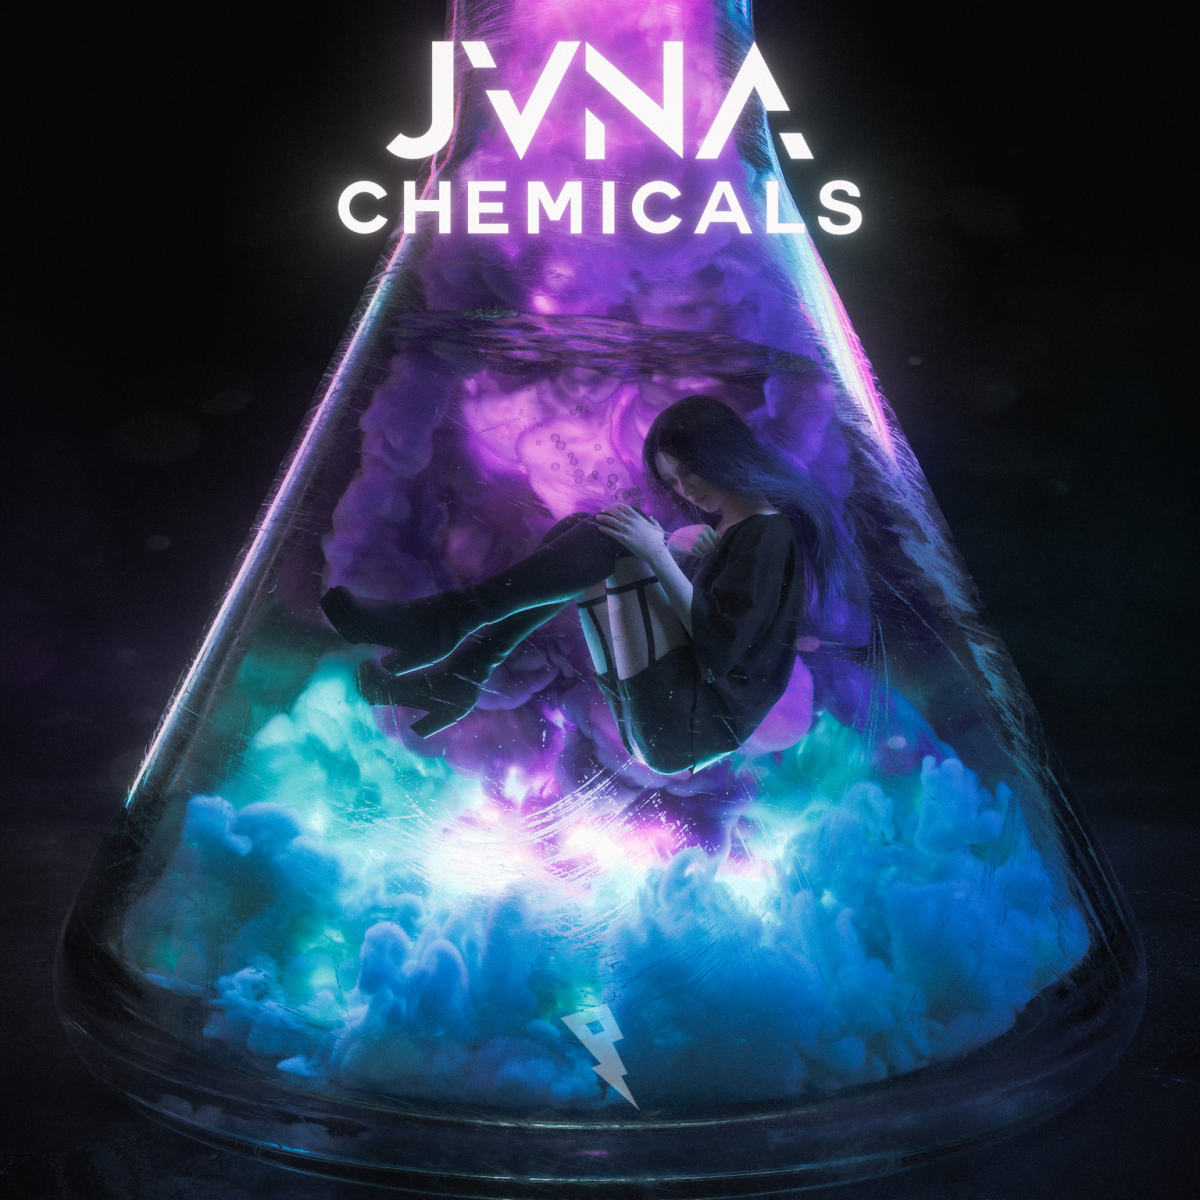 JVNA Chemicals Album Artwork